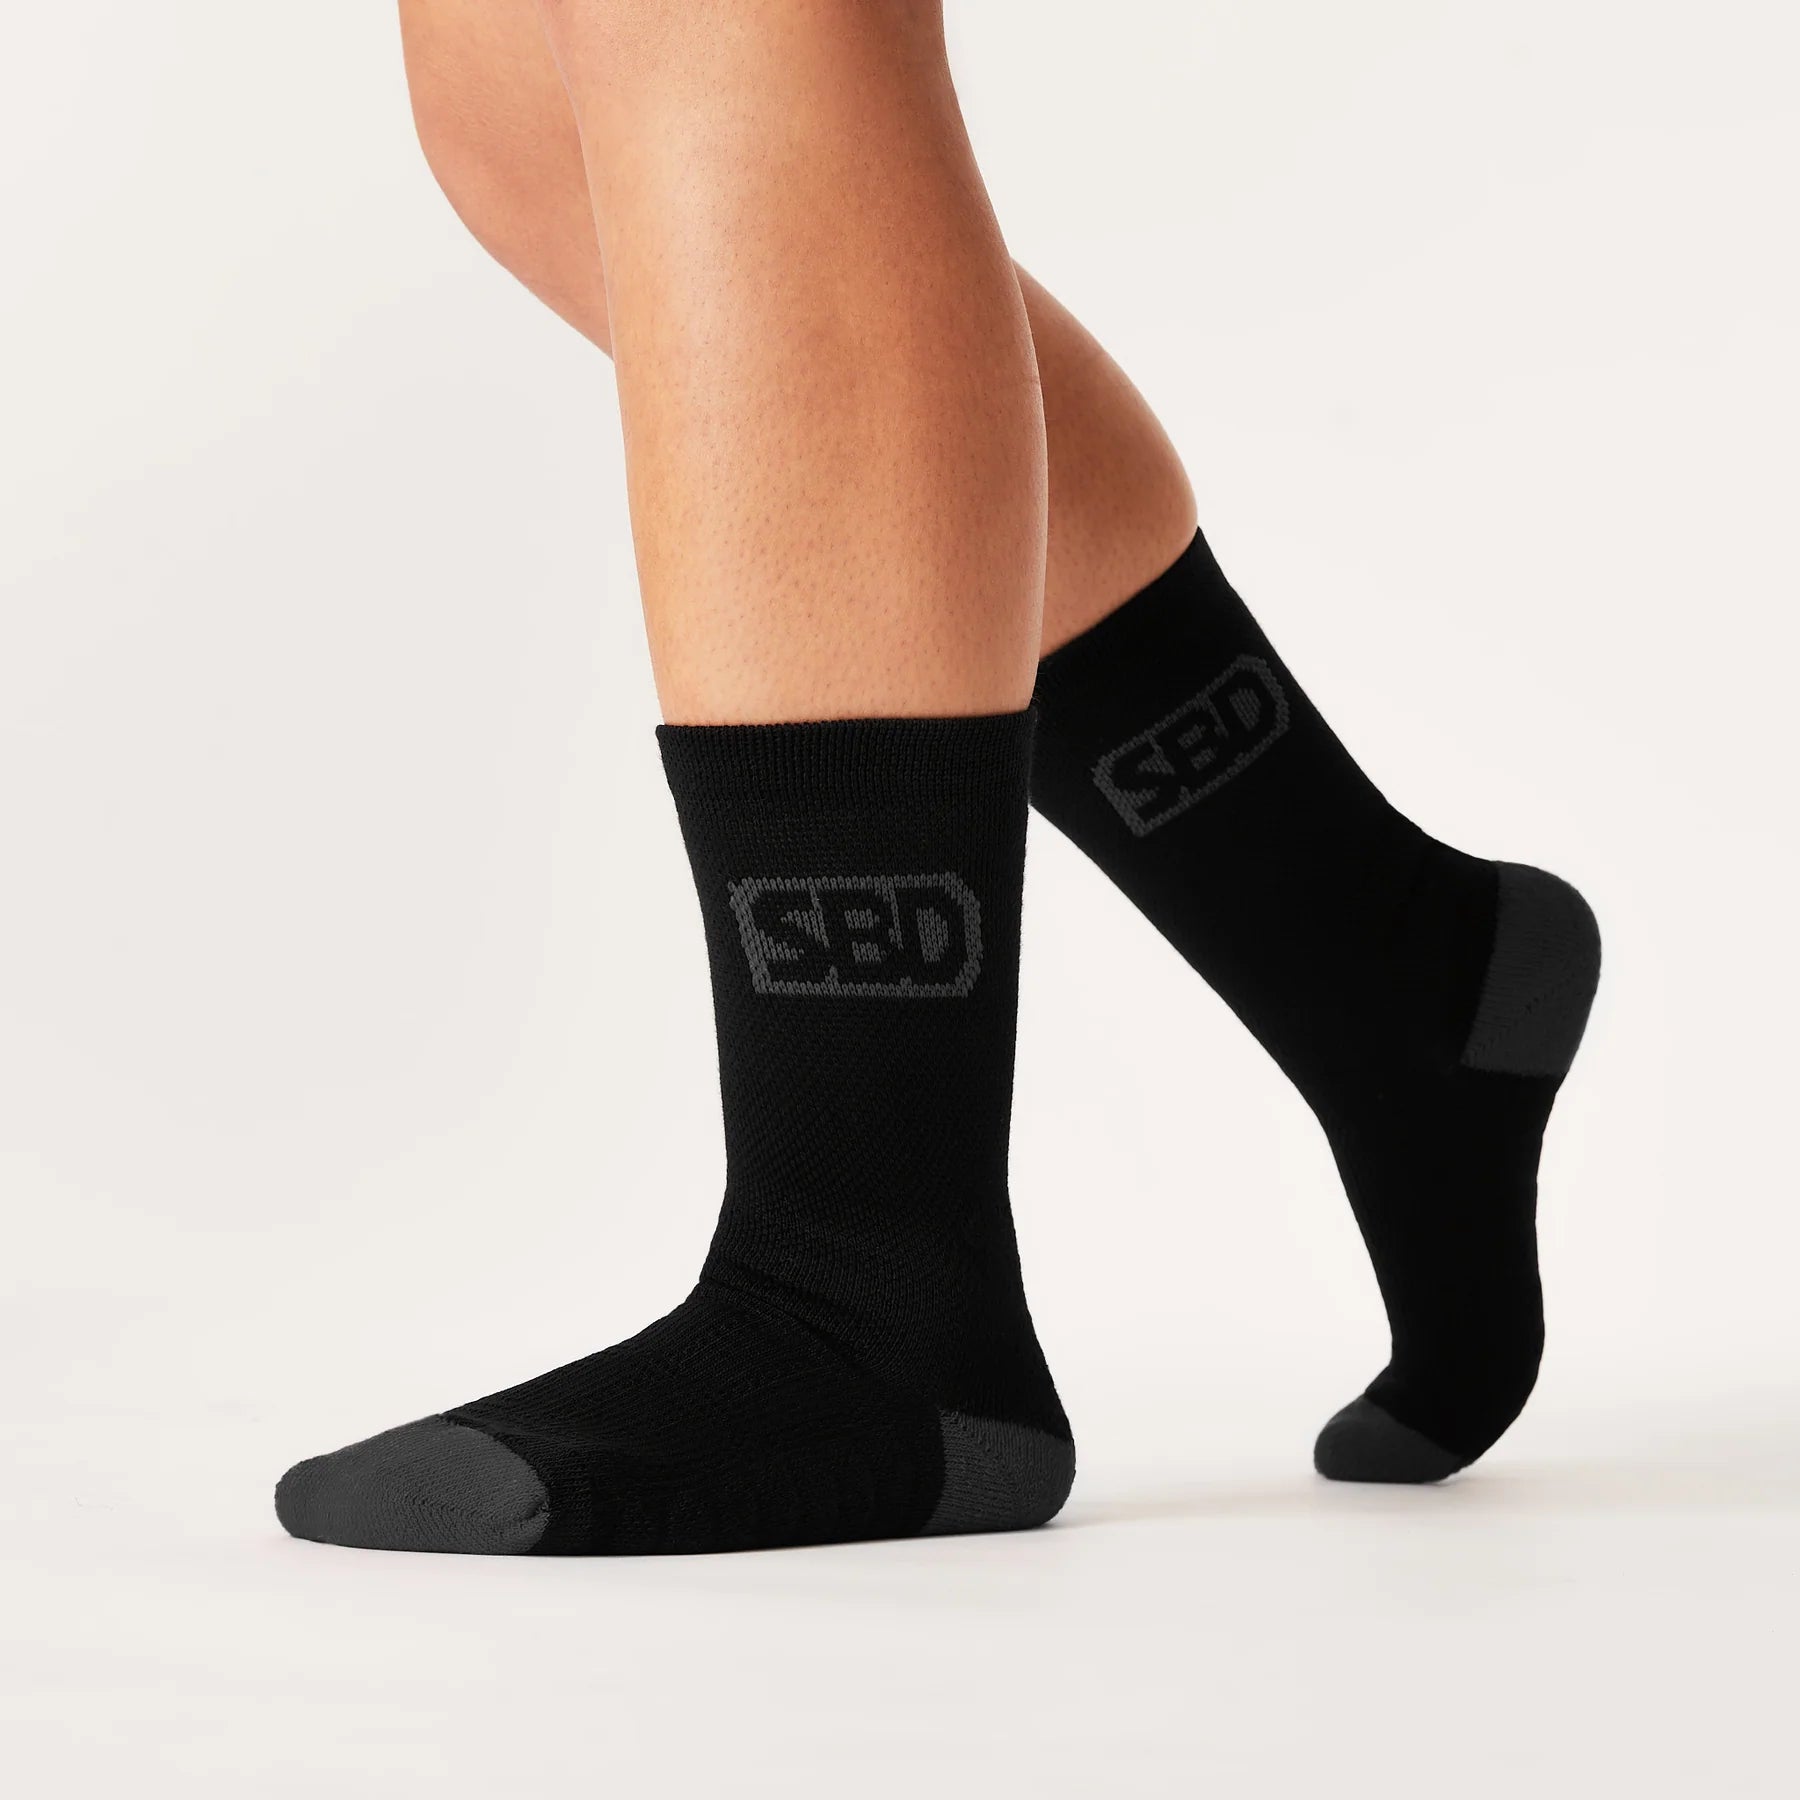 SBD Phantom All Black Sport Socks